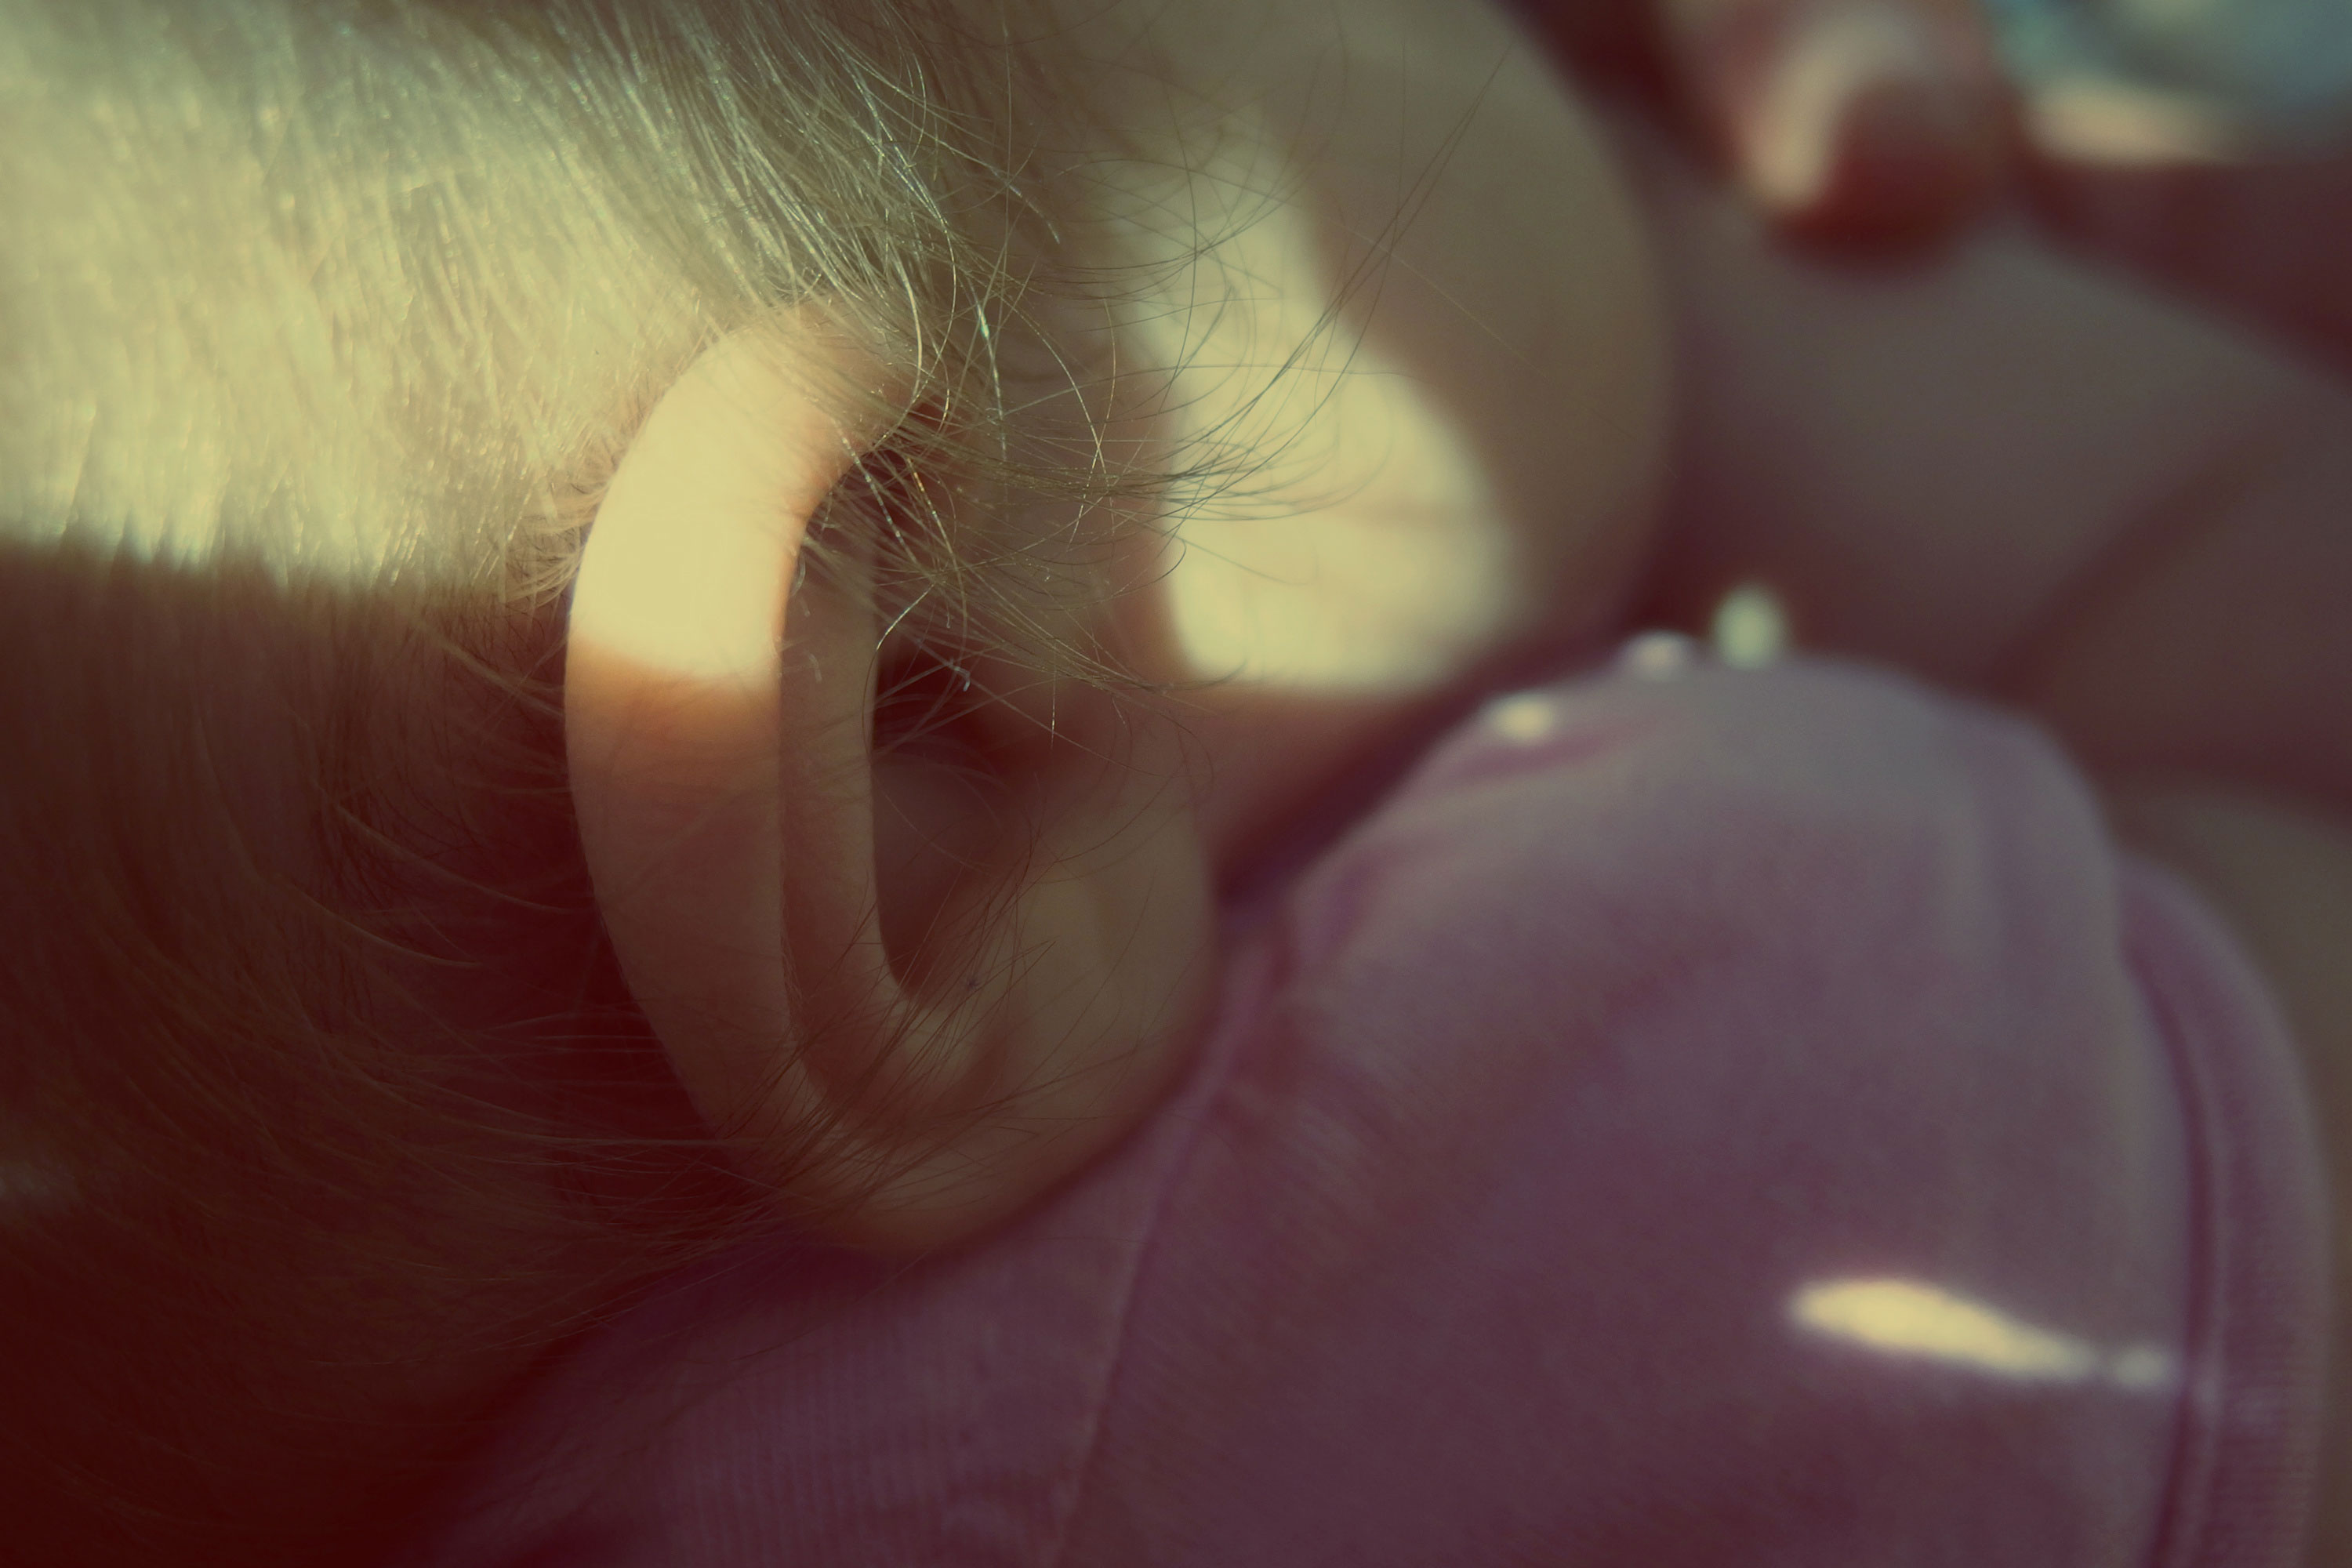 Baby Ear